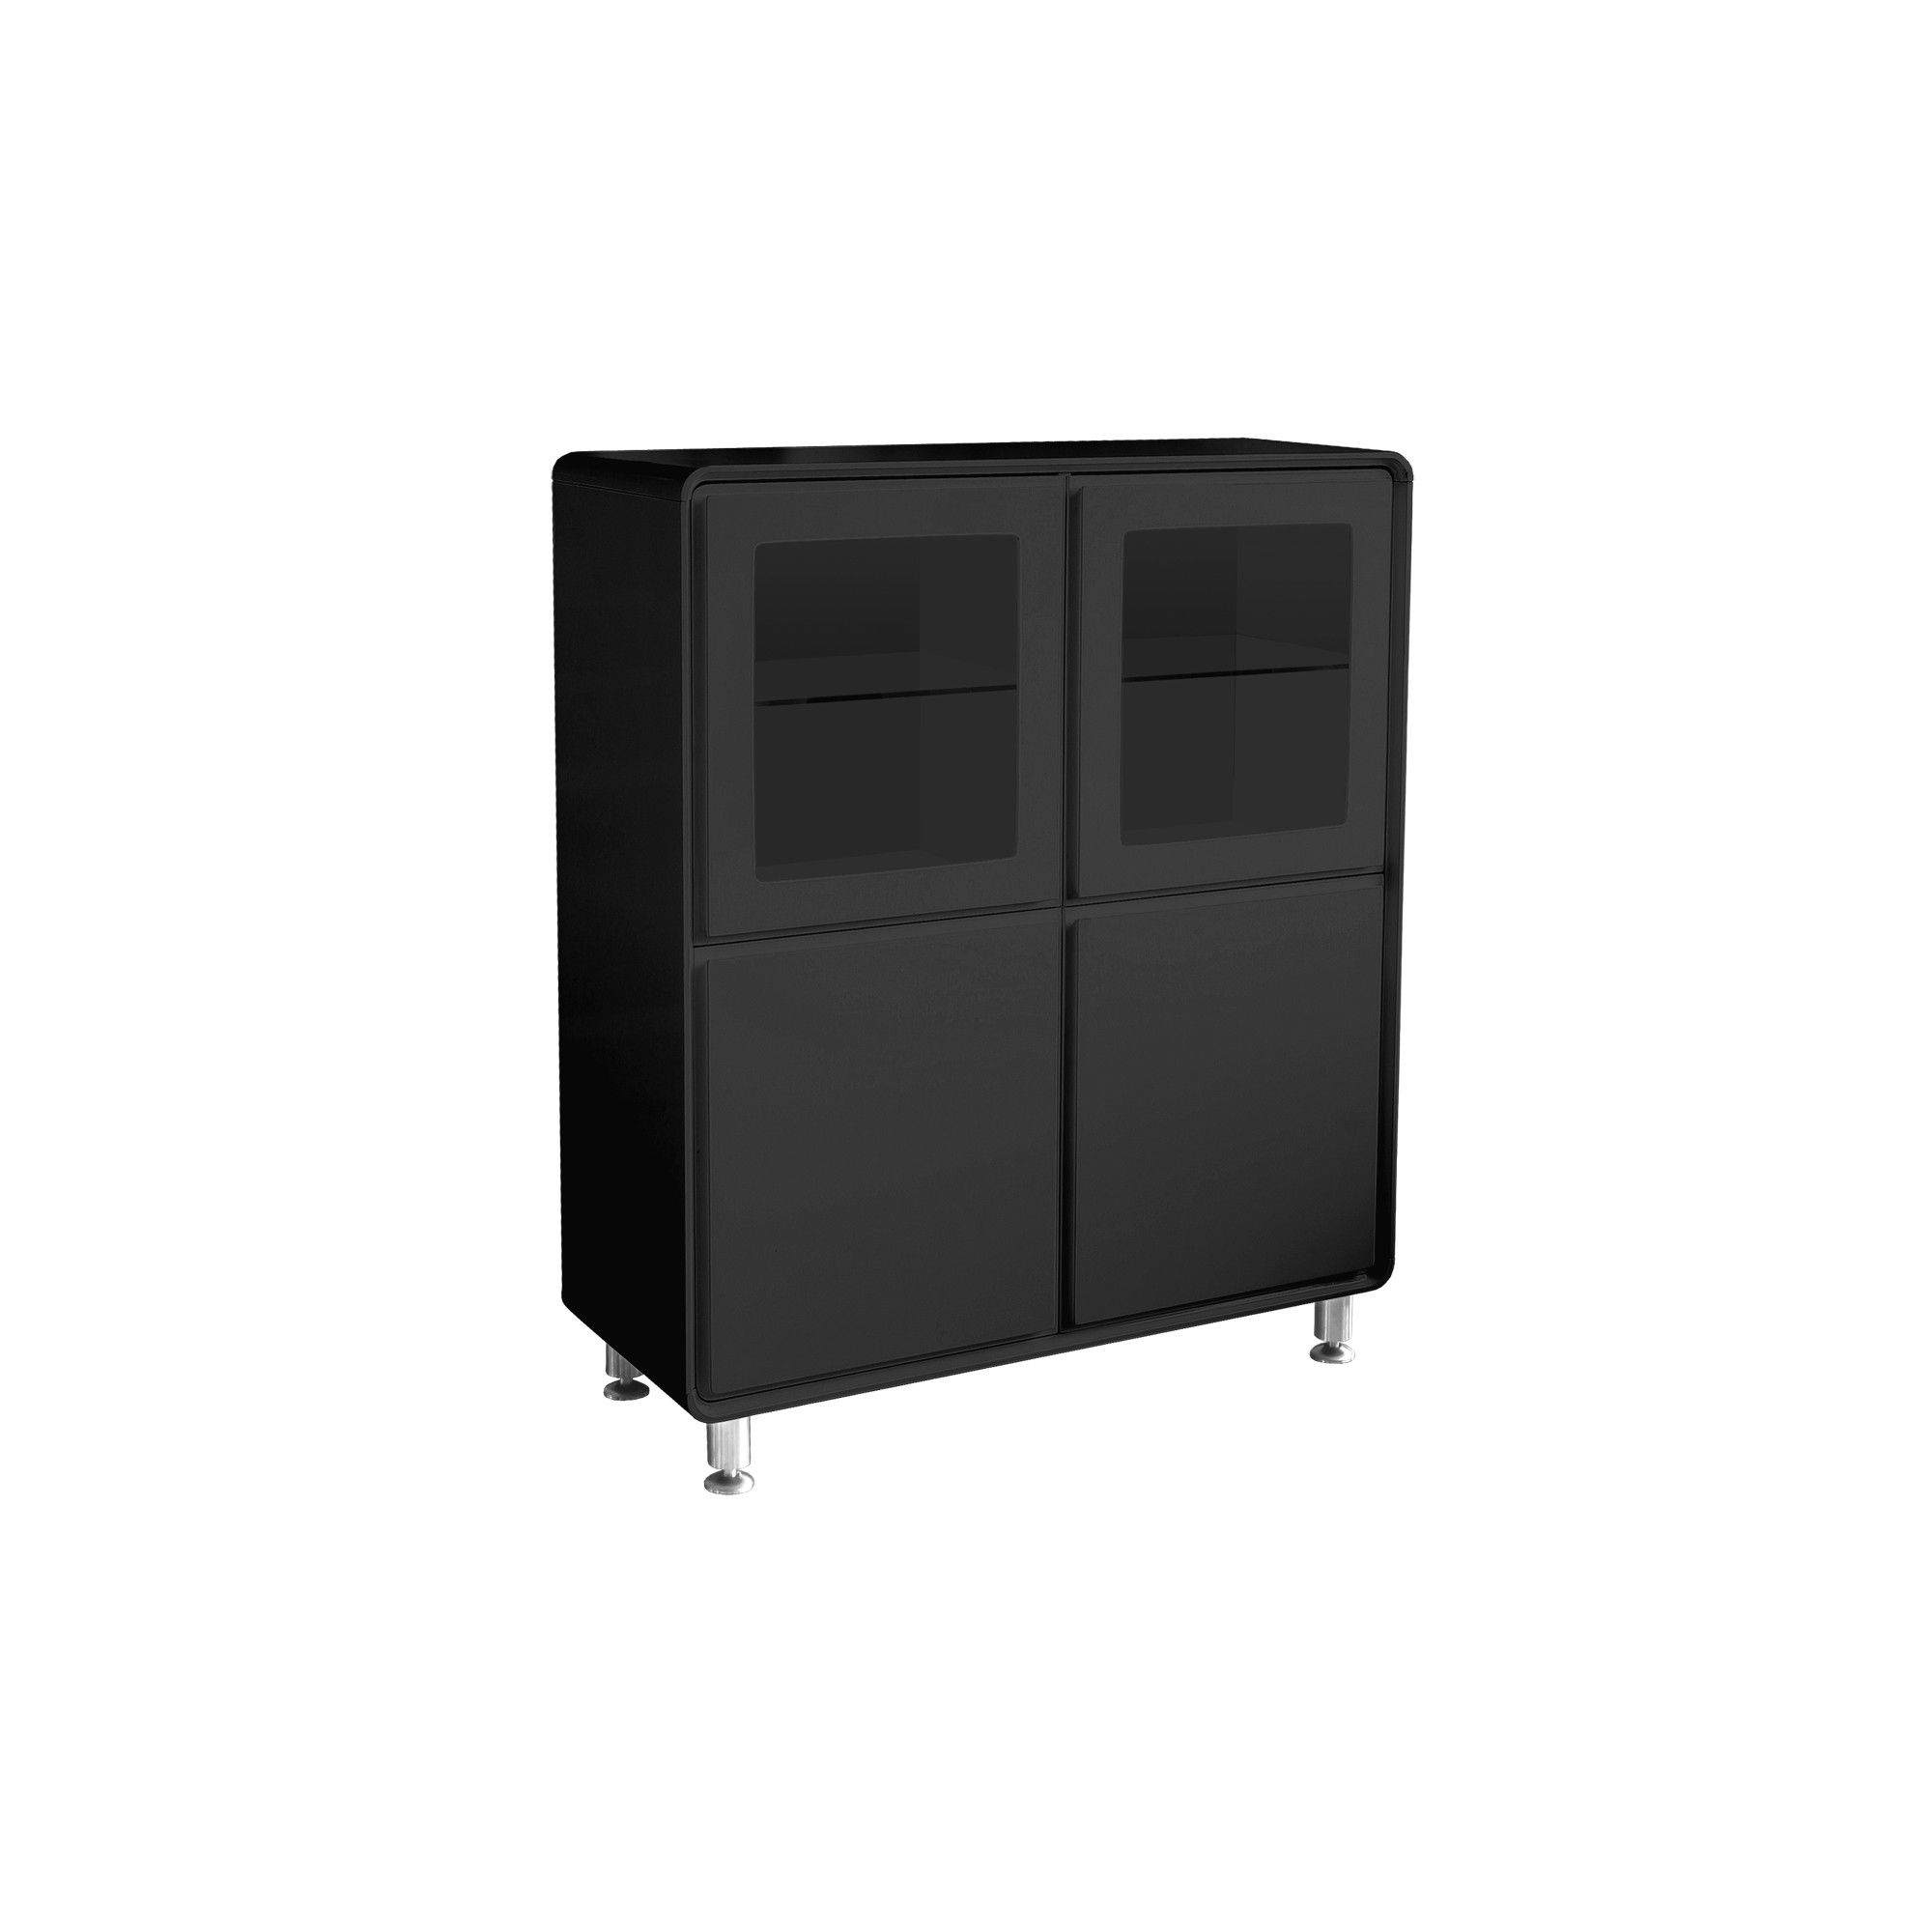 Home Essence Edana Storage Unit - Black at Tescos Direct